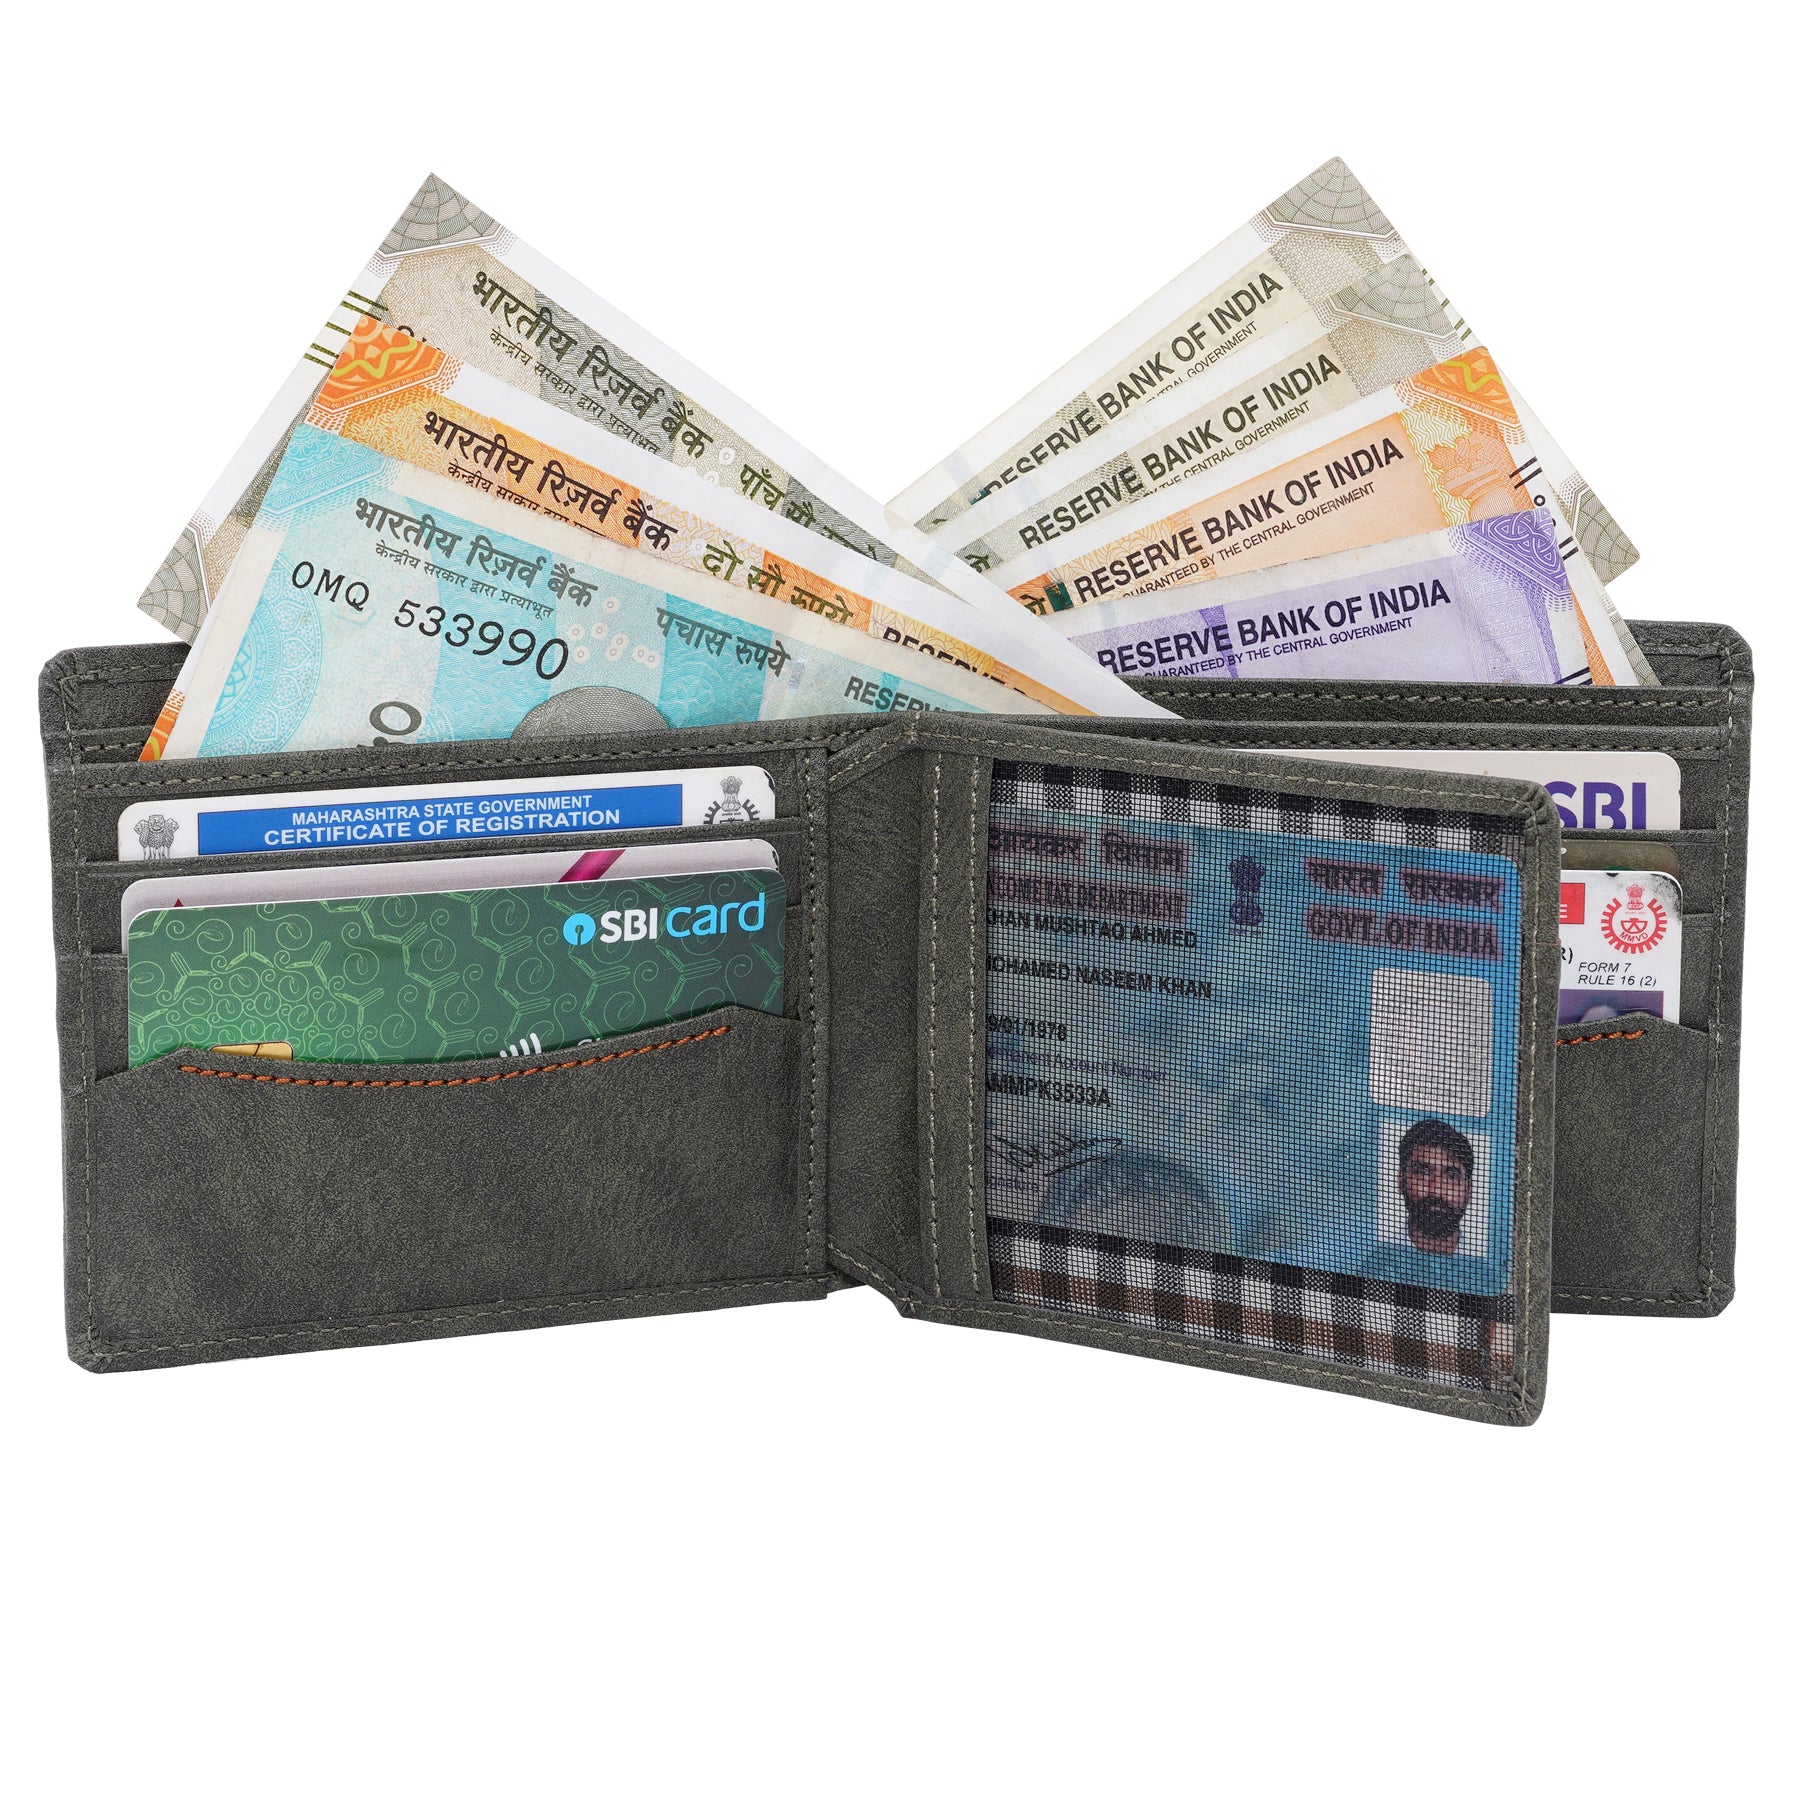 Makas men's wallet , internal look 1,color - Green